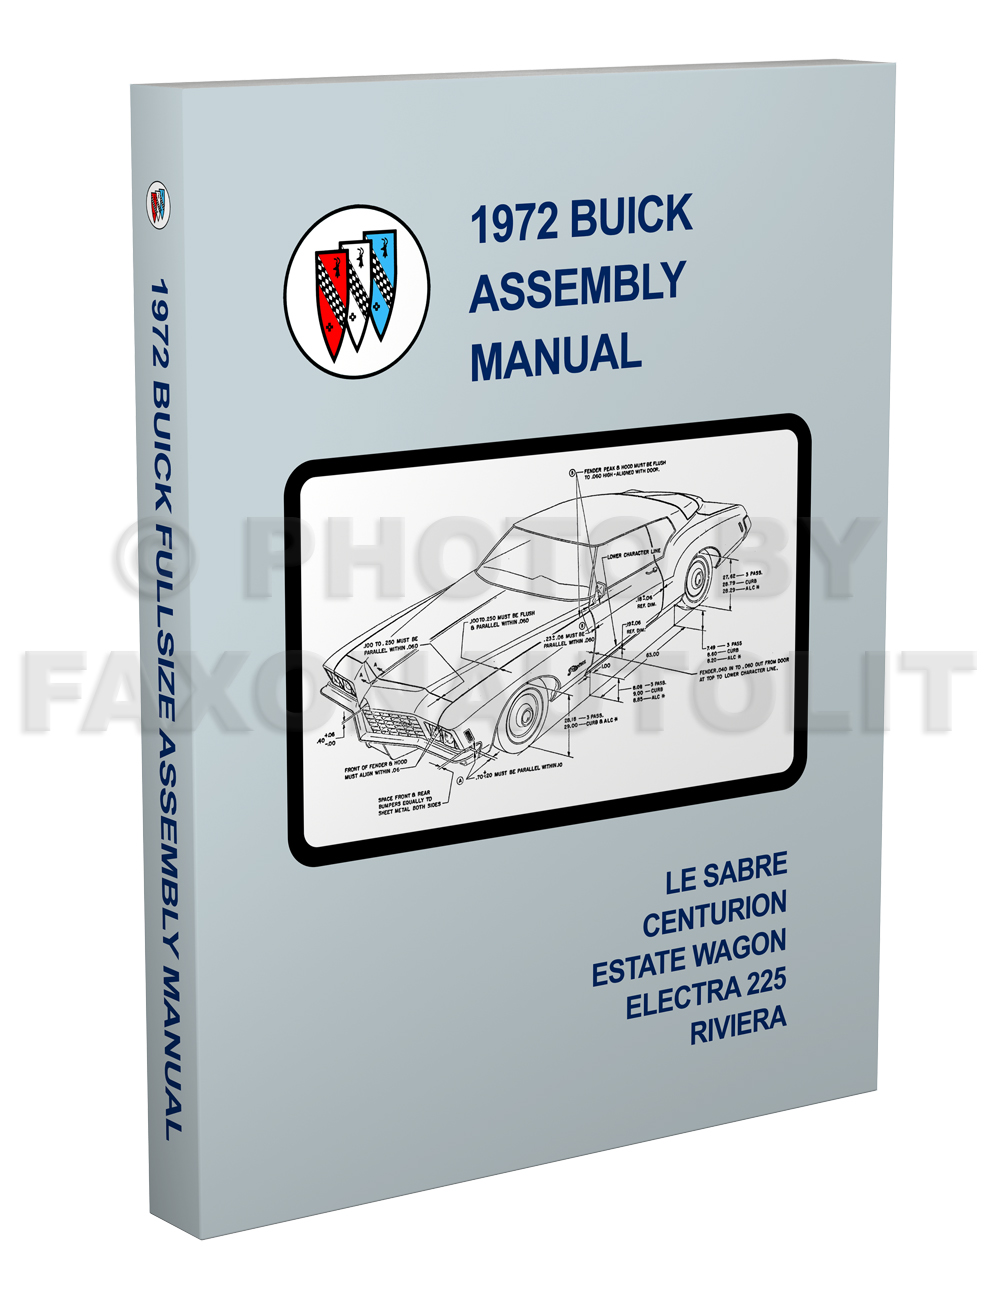 1972 Buick Assembly Manual LeSabre Centurion Electra Riviera